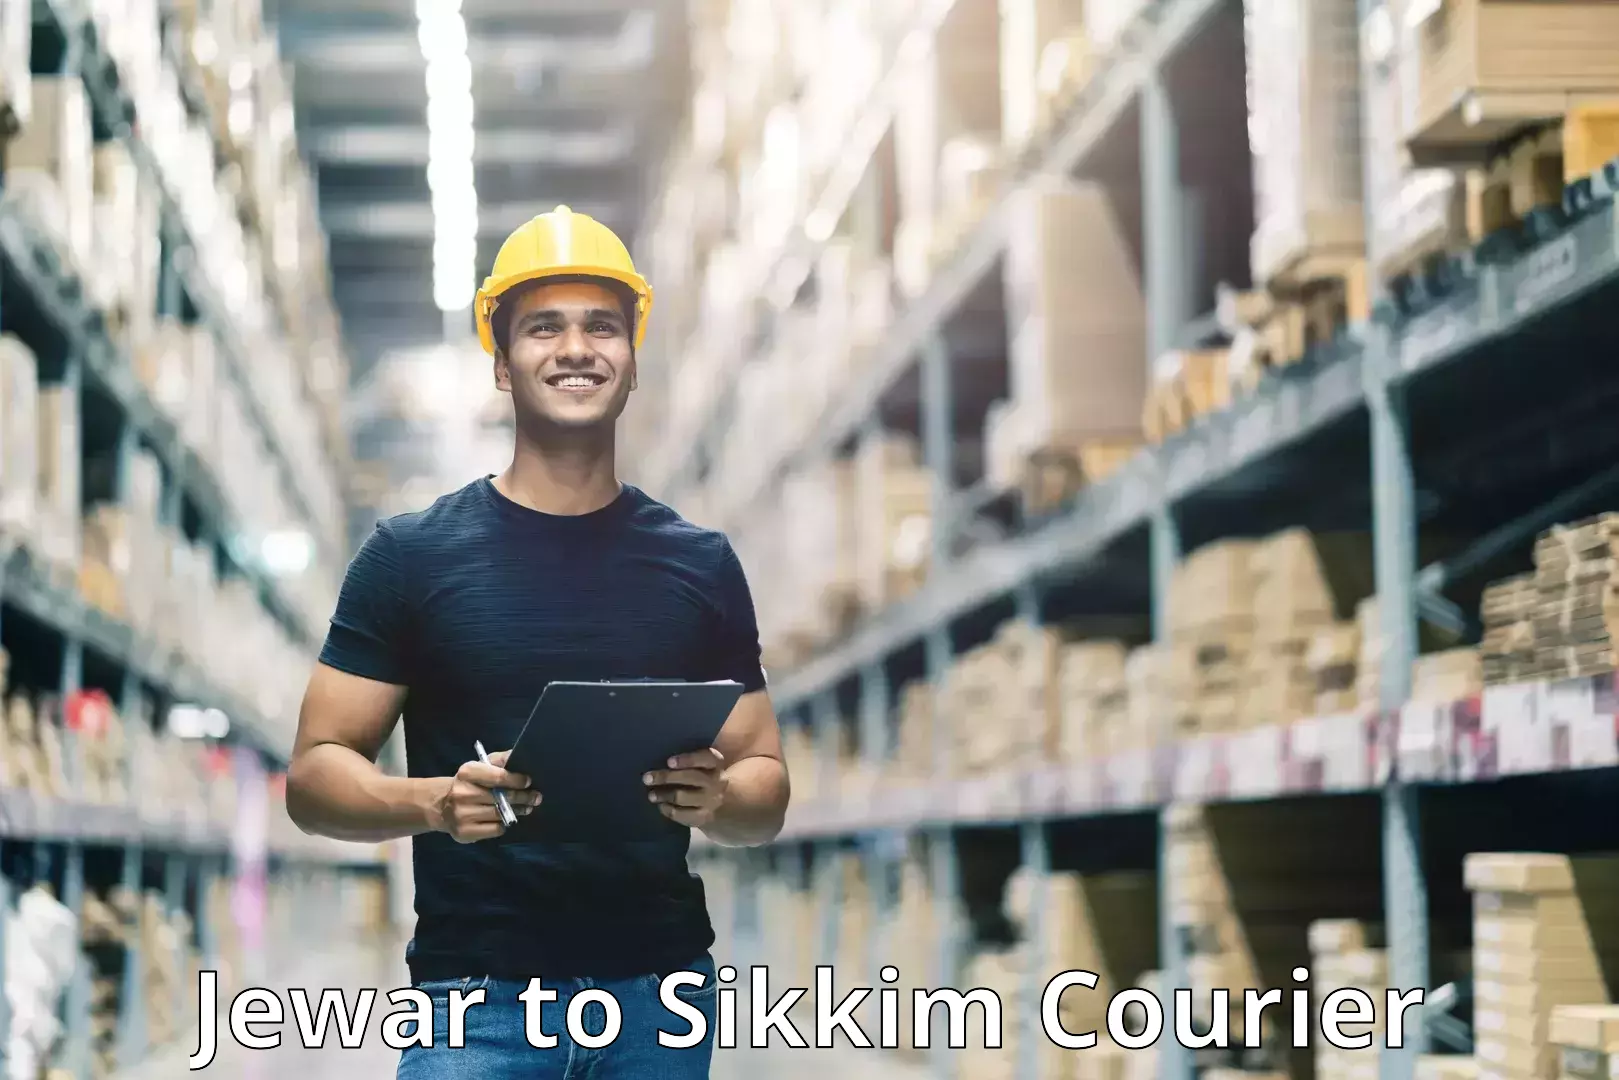 Courier service comparison Jewar to Sikkim